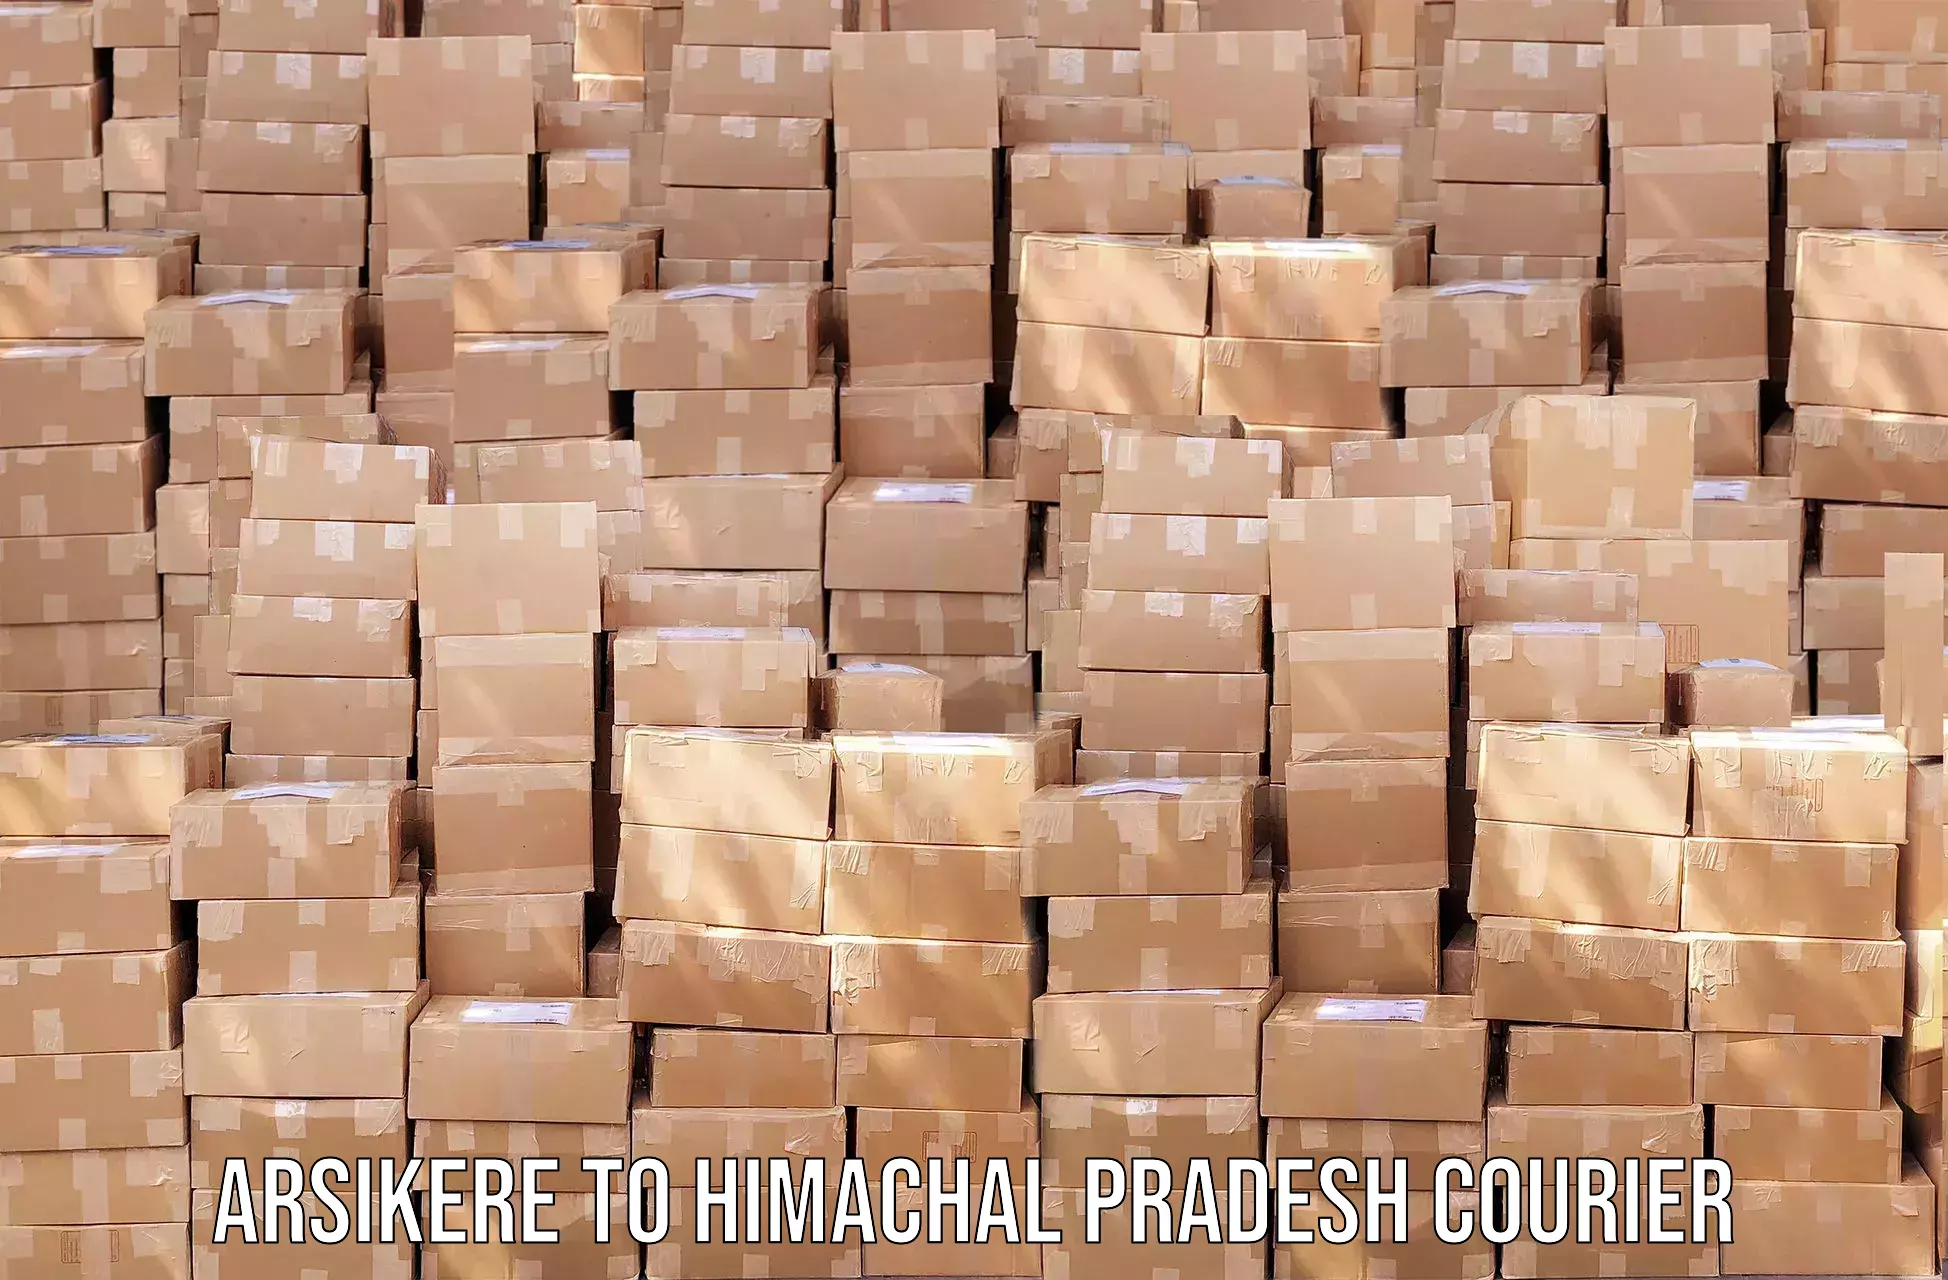 Express package handling Arsikere to Himachal Pradesh